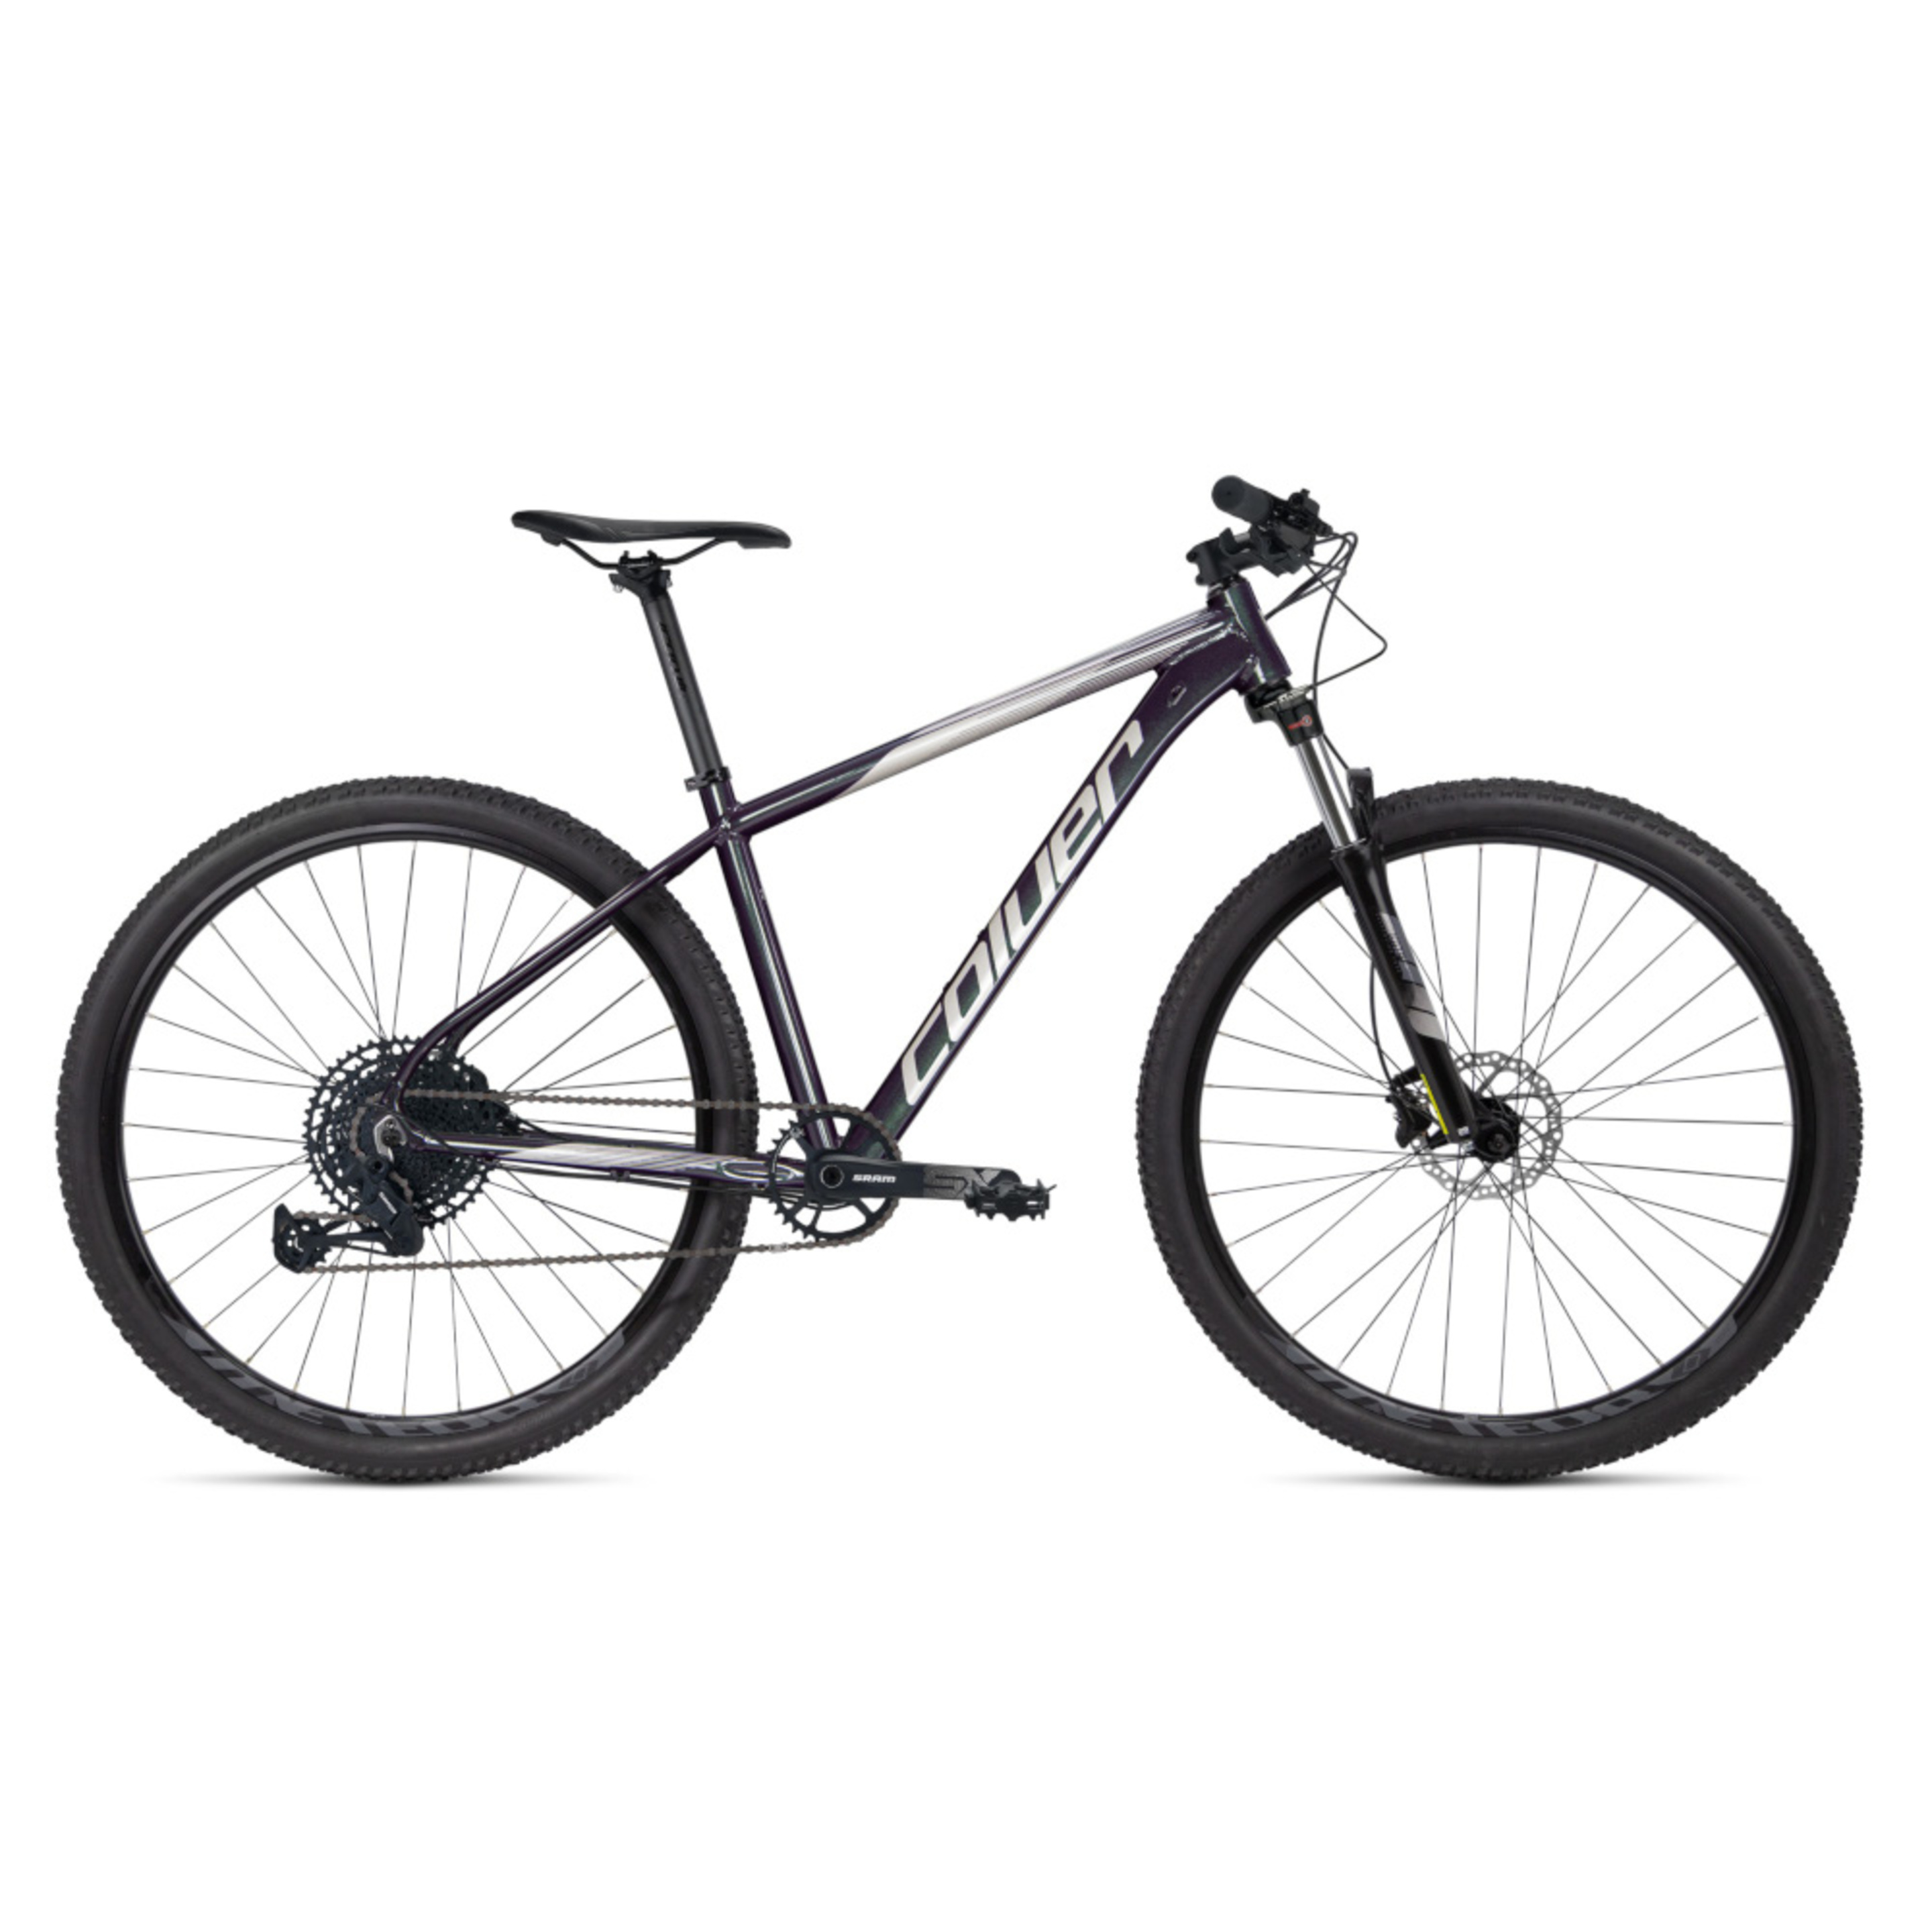 Bicicleta Montaña 29" Coluer Limbo 296 - Púrpura  MKP